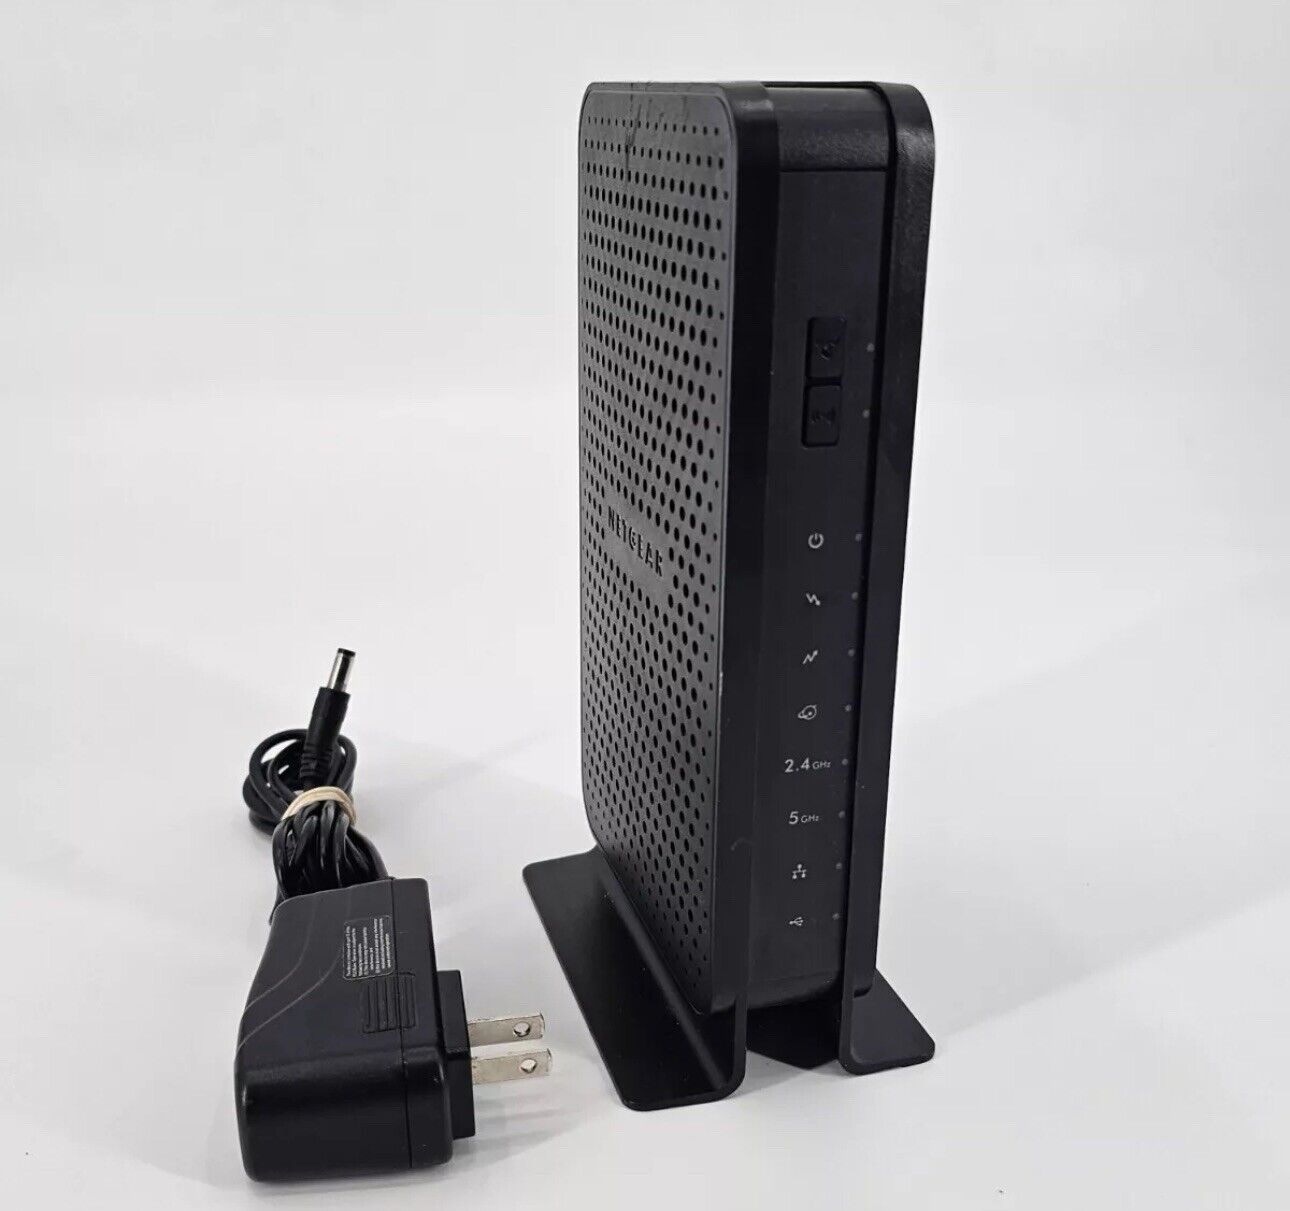 Netgear N600 WiFi Cable Modem Router Model C3700v2